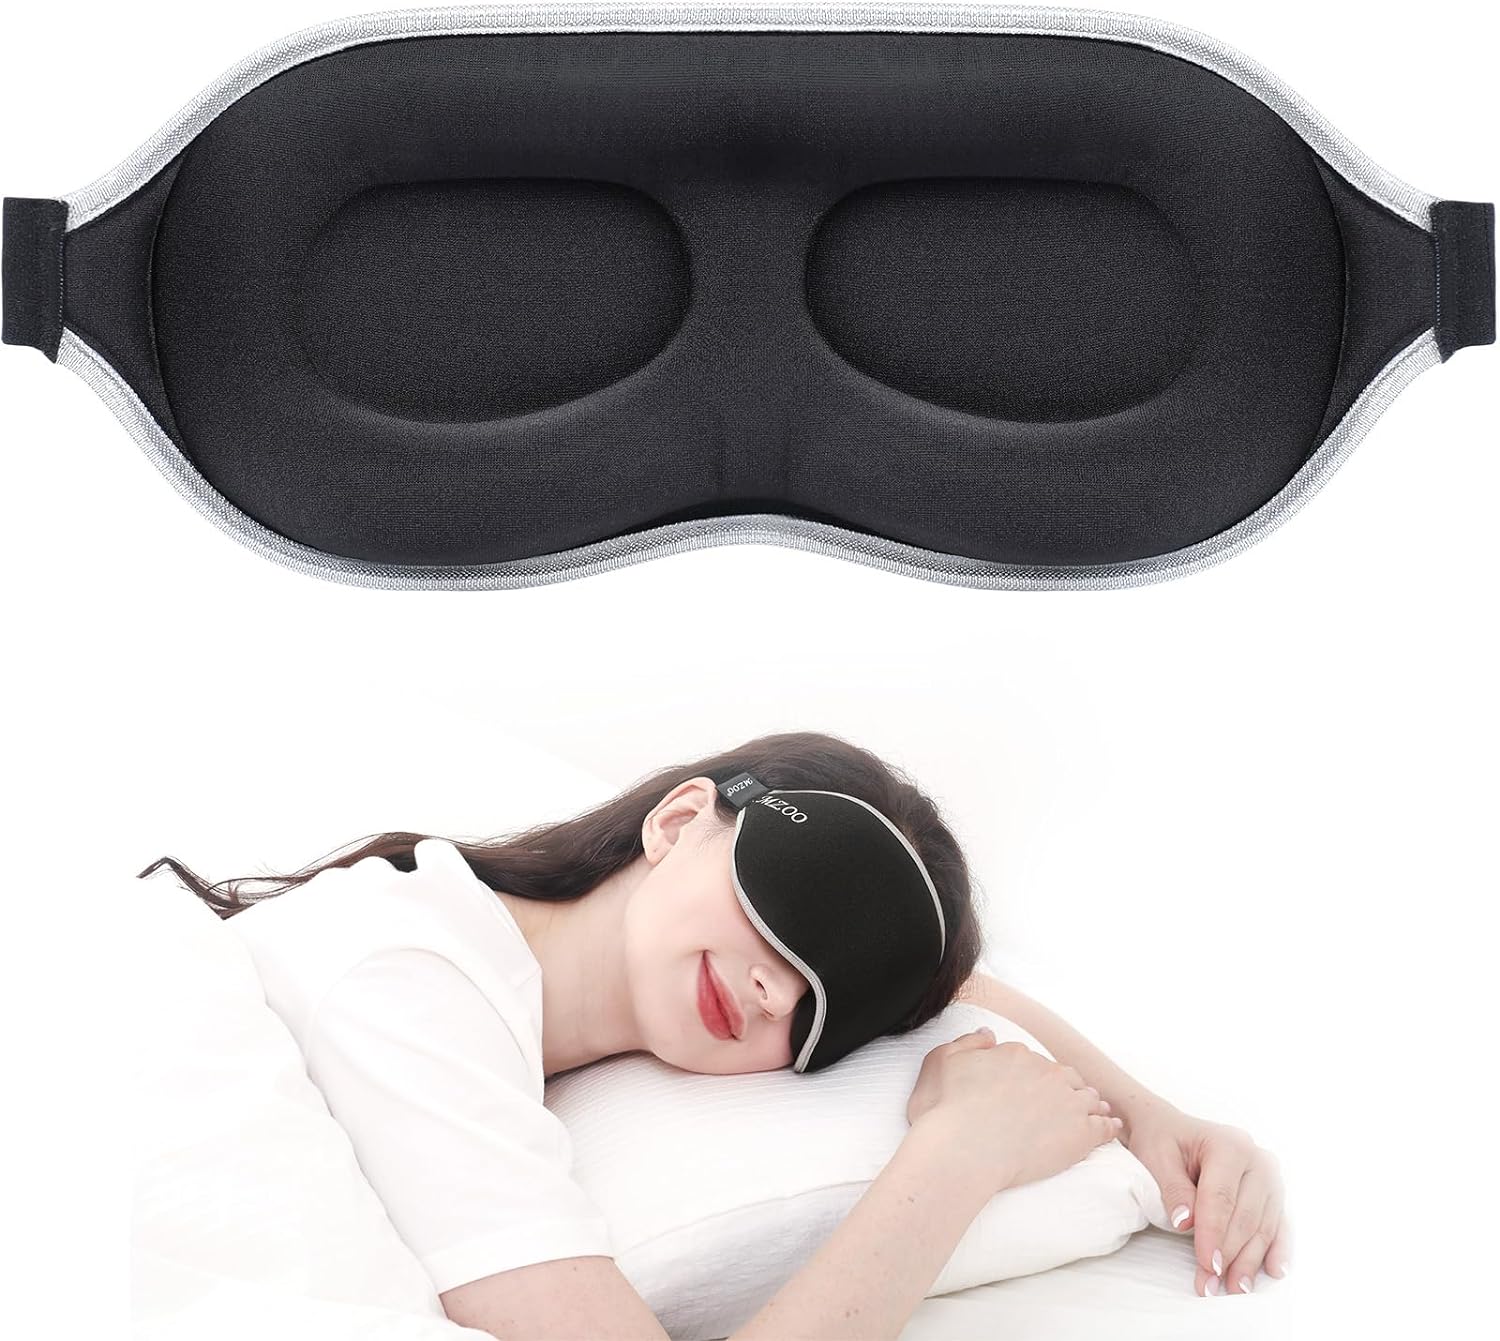 MZOO Luxury Sleep Mask for Back and Side Sleeper, 100% Block Out Light Sleeping Eye Mask for Women Men, Zero Eye Pressure 3D Contoured Night Blindfold, Breathable & Soft Eye Shade Cover Black